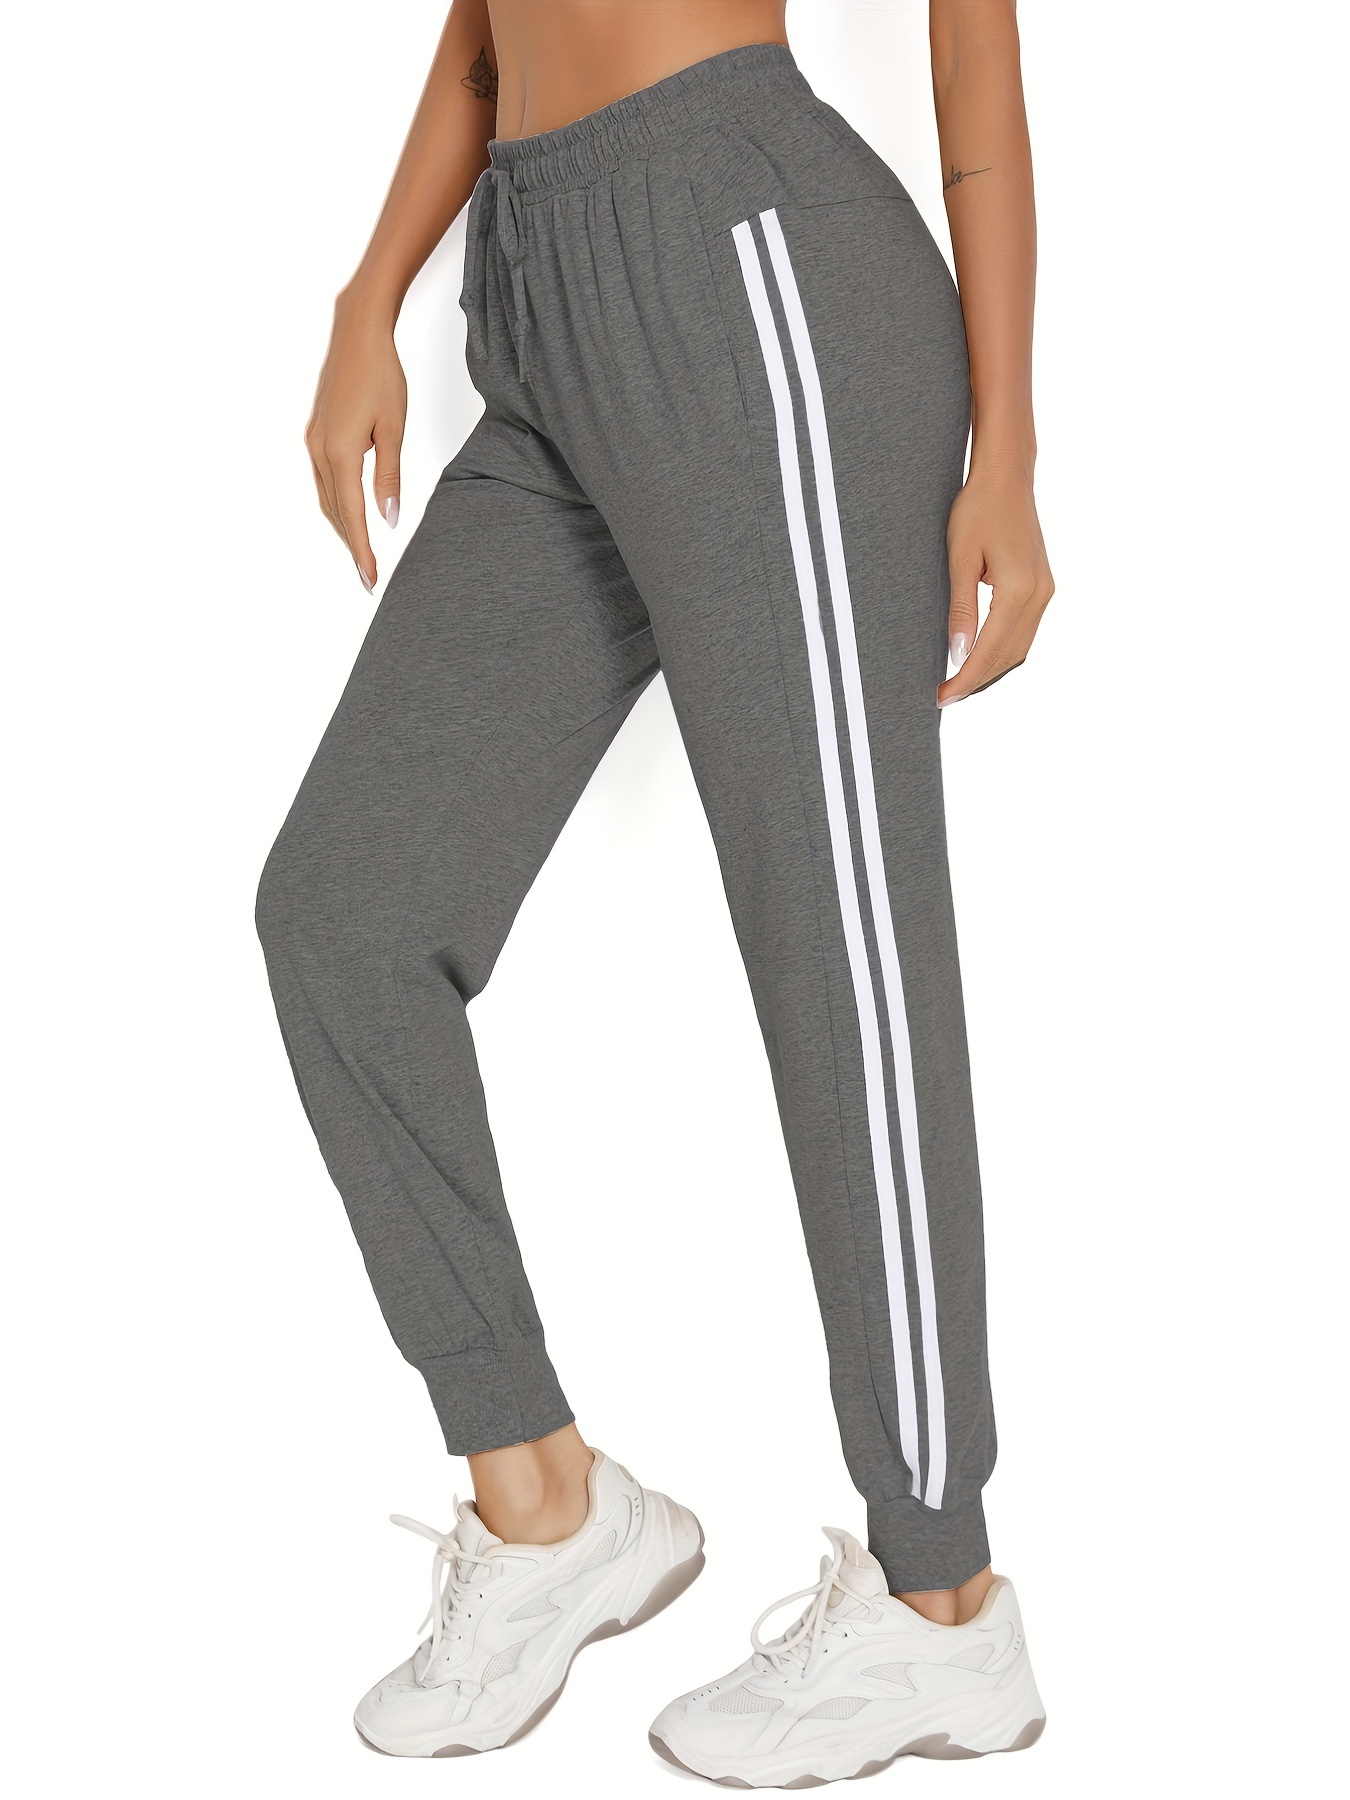 Sweatpants For Women Women's High Waisted Sweatpants Long Joggers